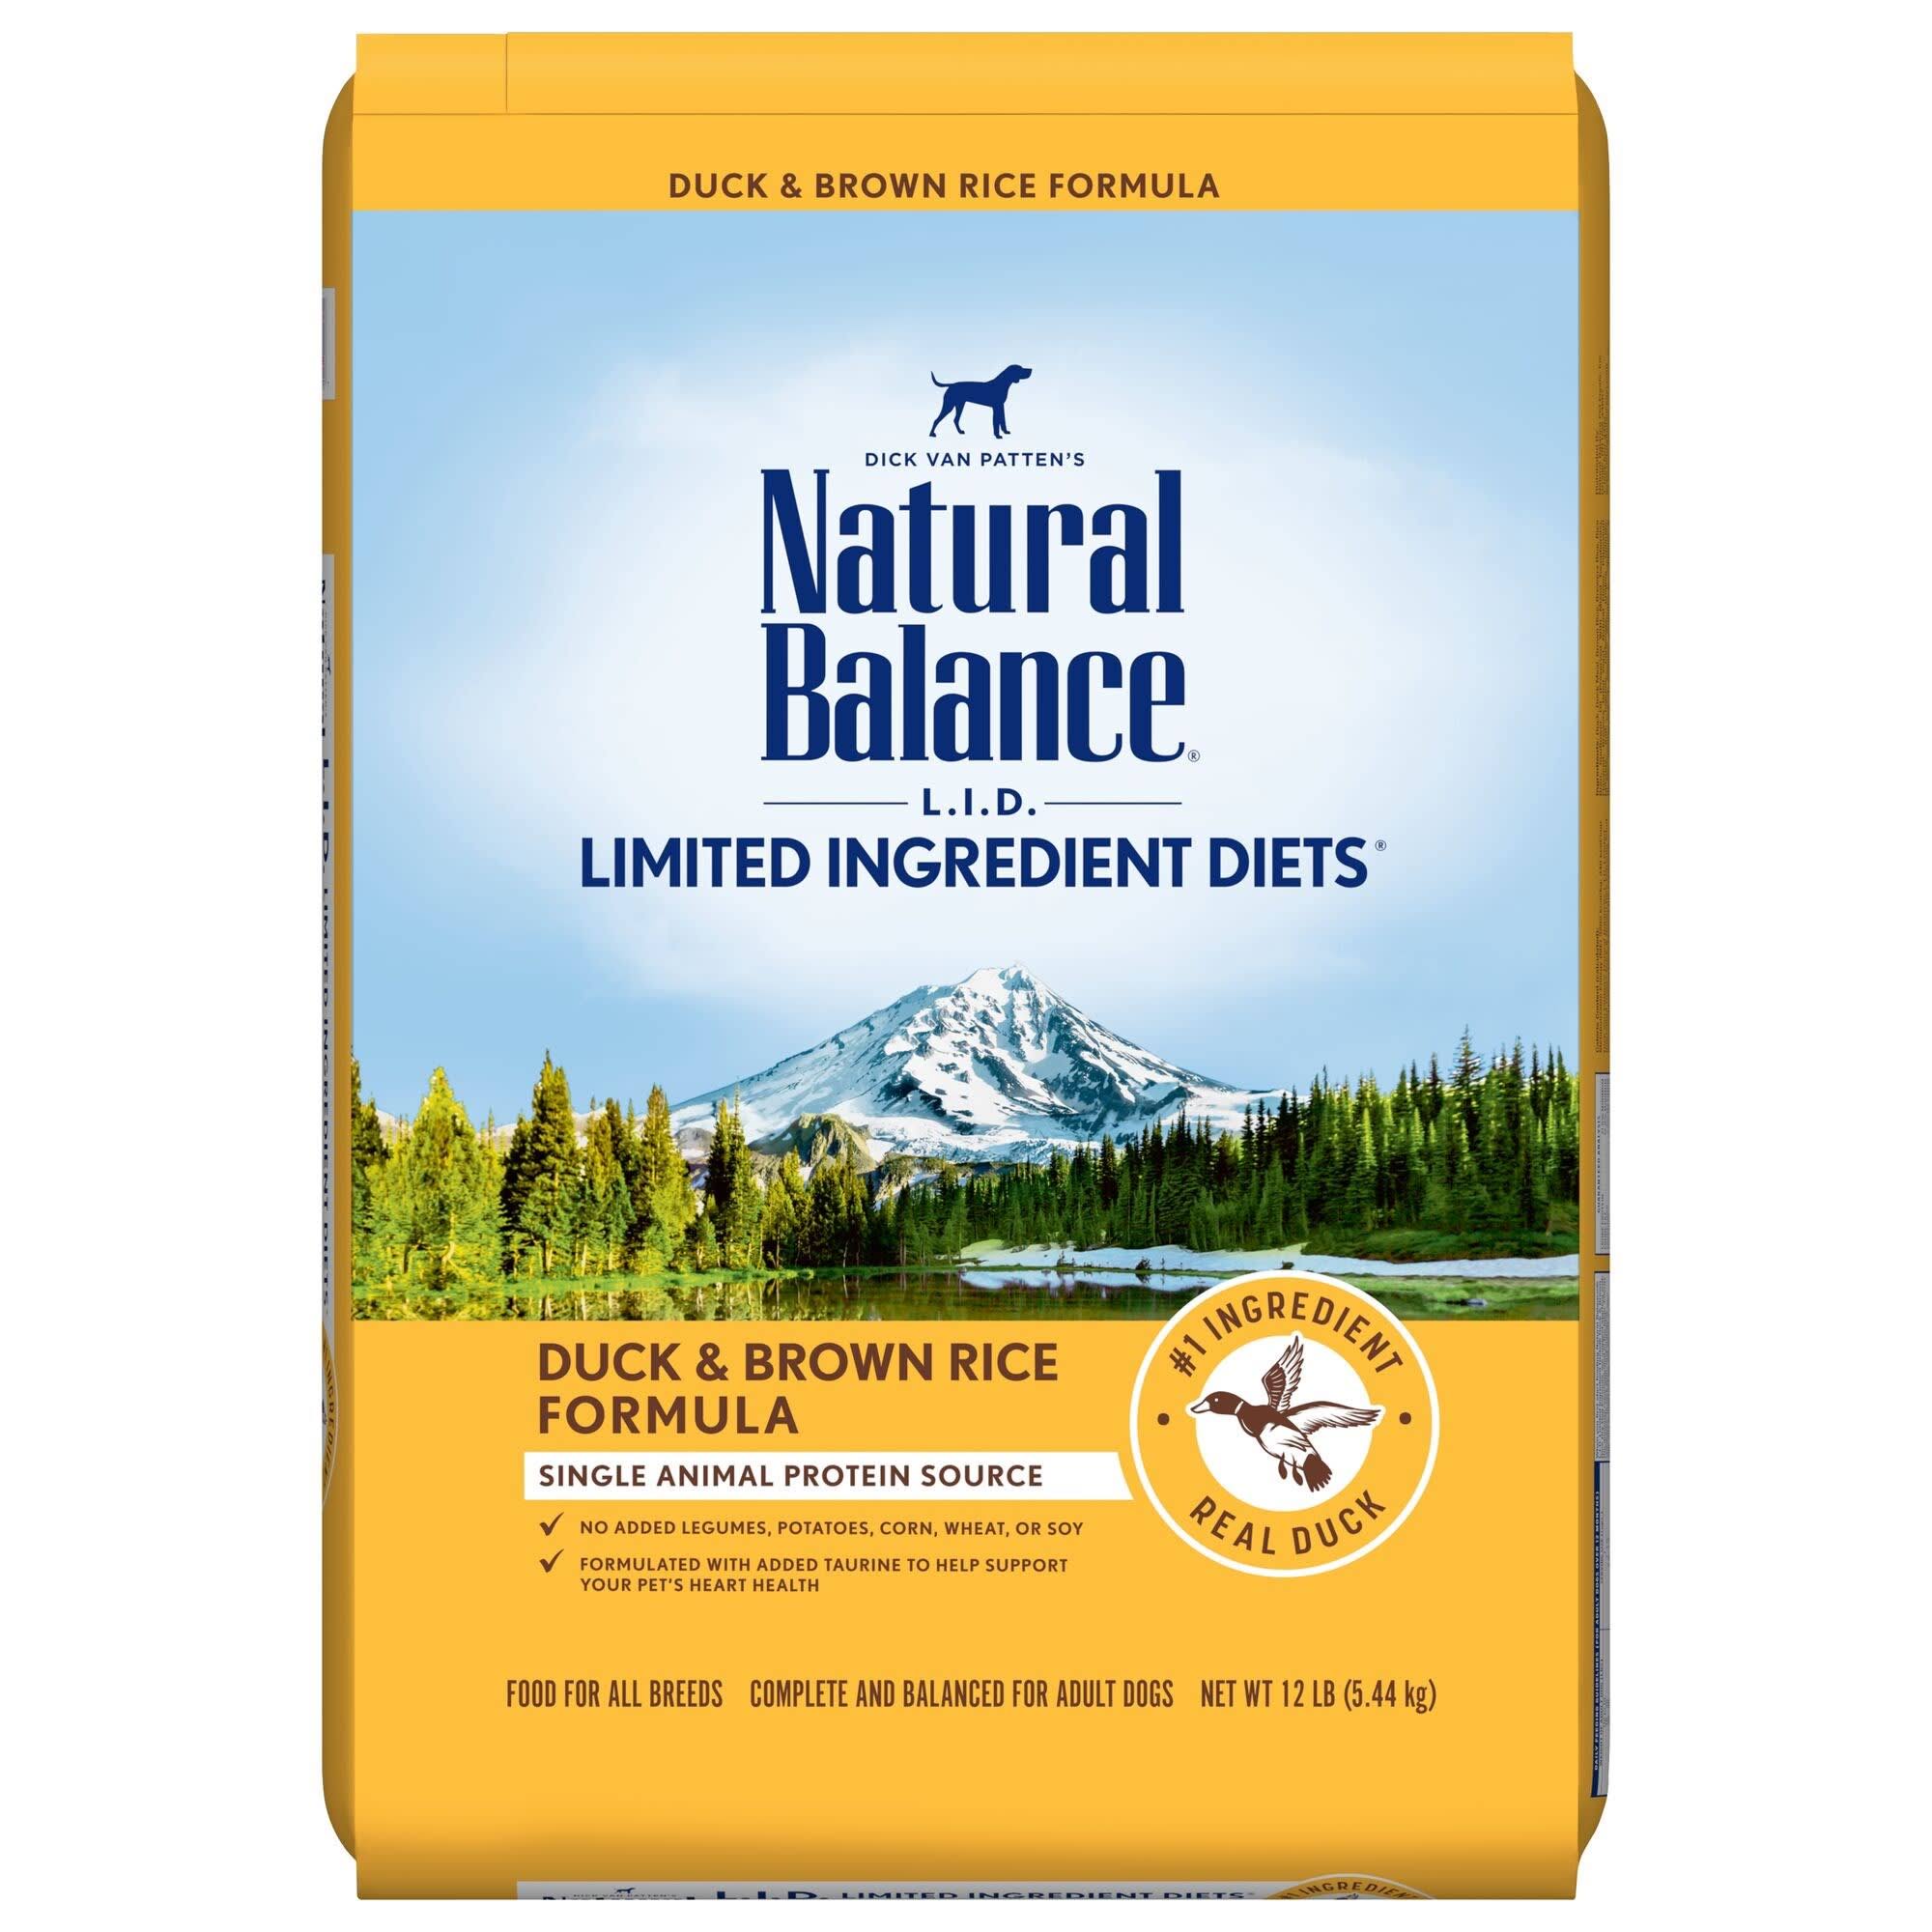 Natural Balance Limited Ingredient Diets Dog Food, Duck & Brown Rice Formula - 12 lb